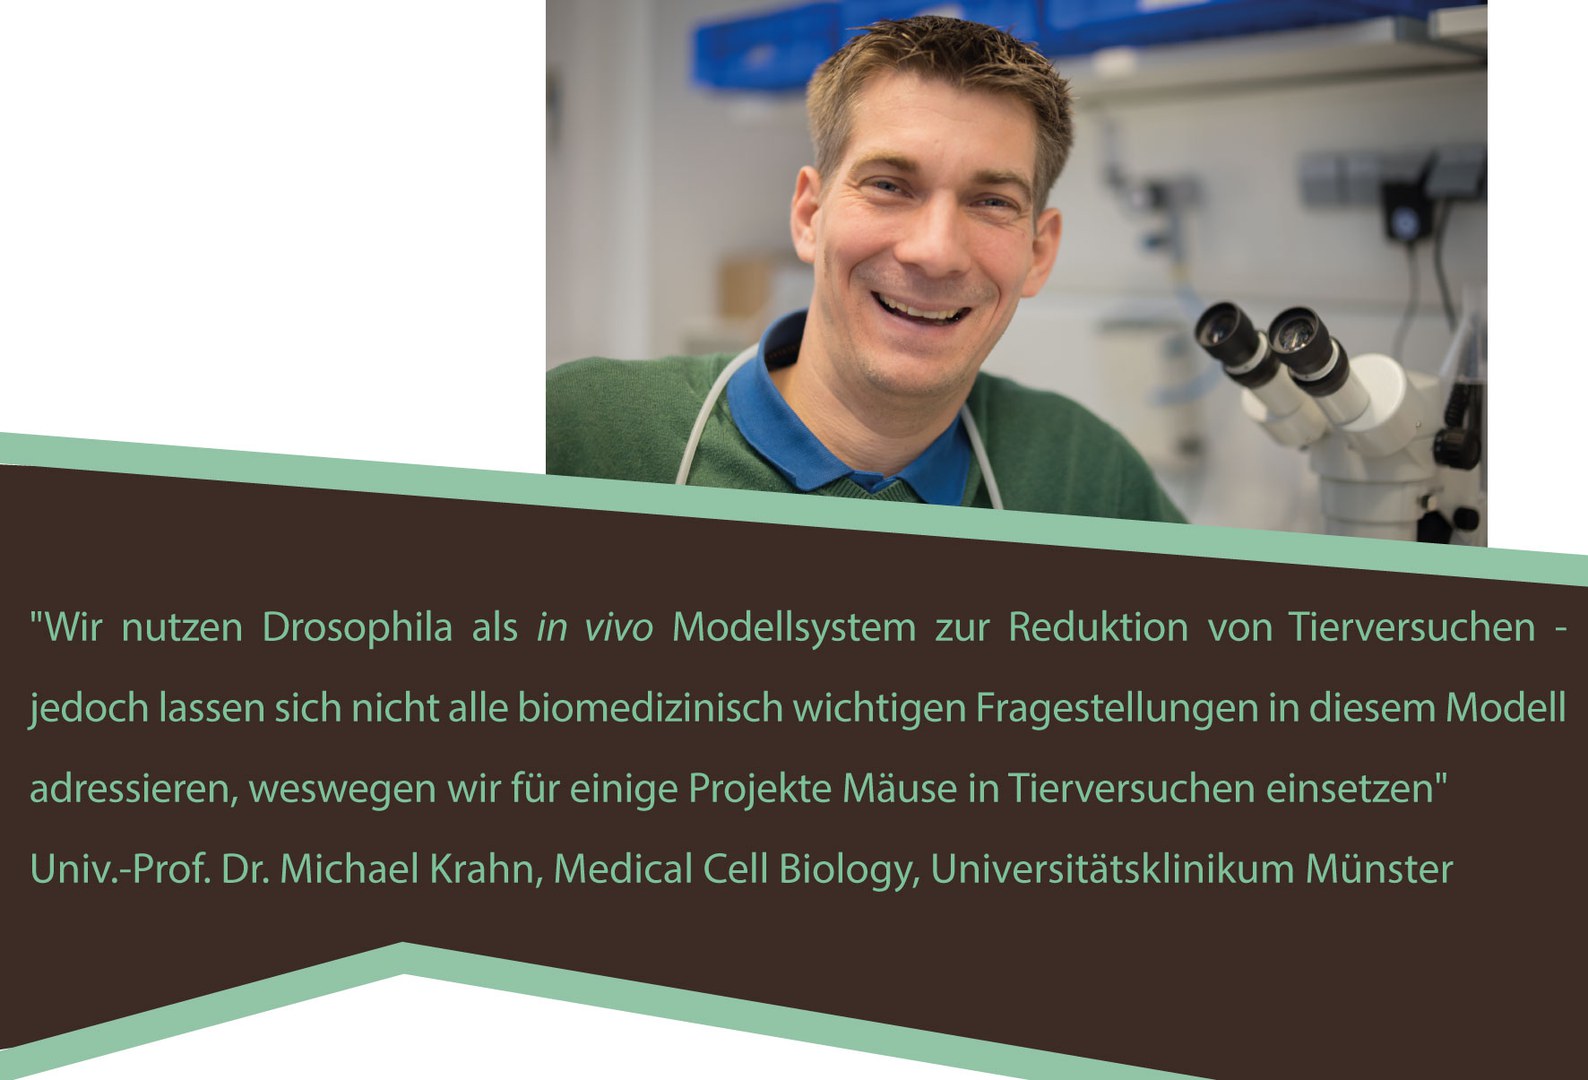 Univ.-Prof. Dr. Michael Krahn